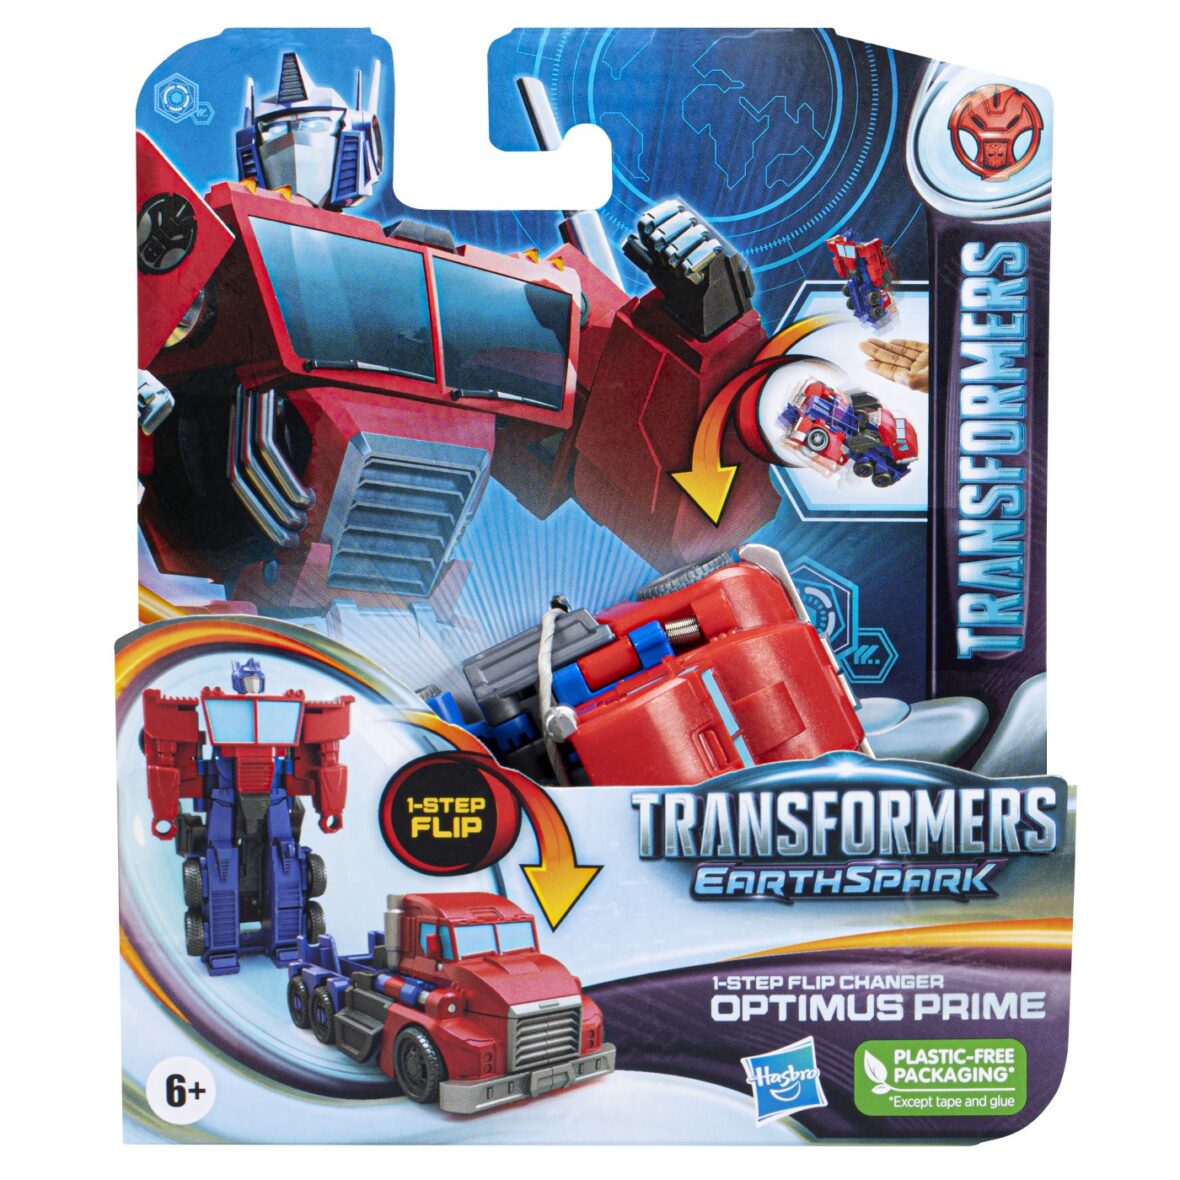 Transformers 7 Earthspark Figurina Transformabila Optimus Prime 6cm